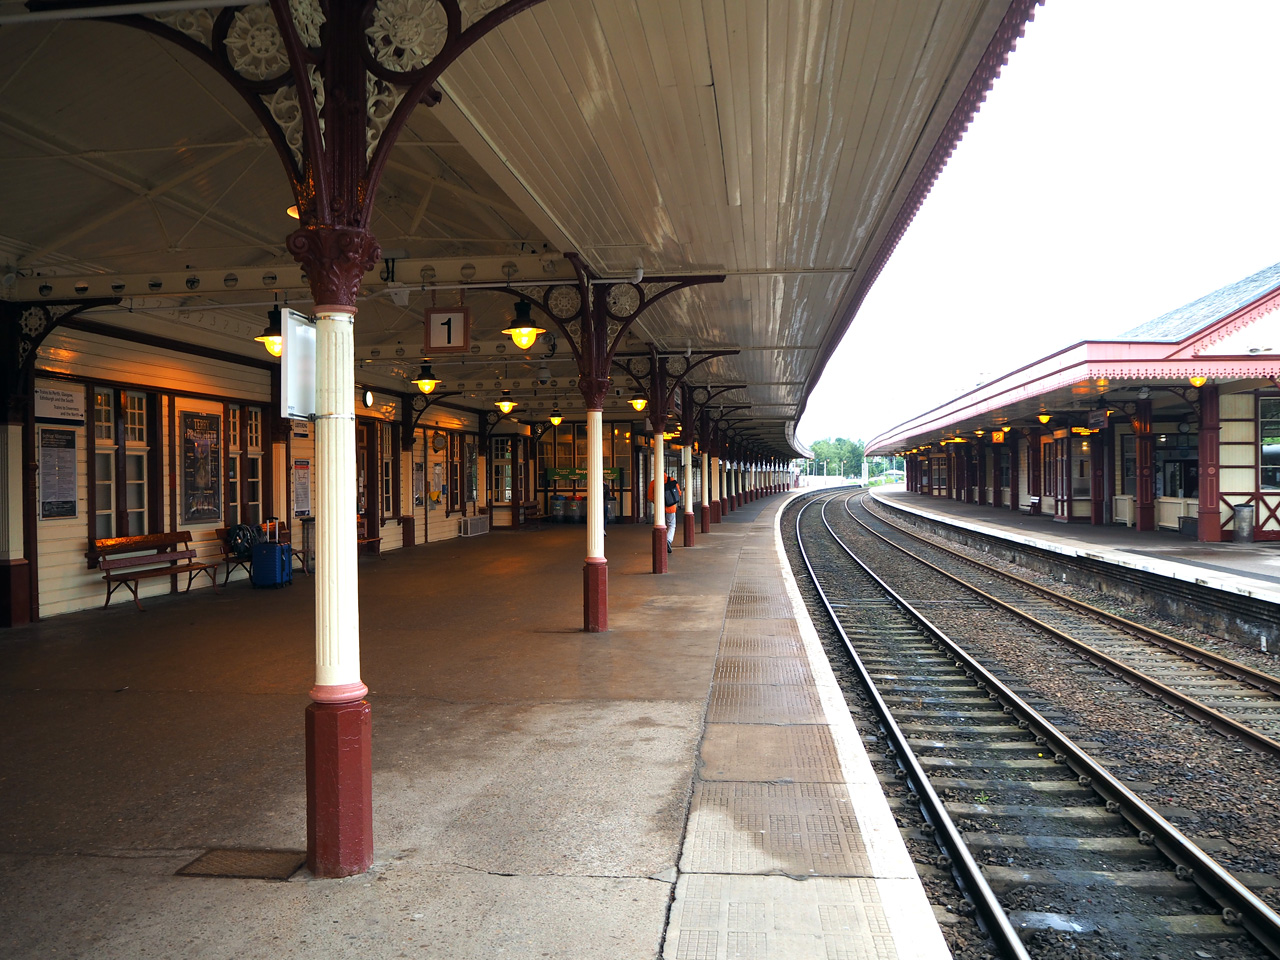 Railwey station Aviemore Cairngorms